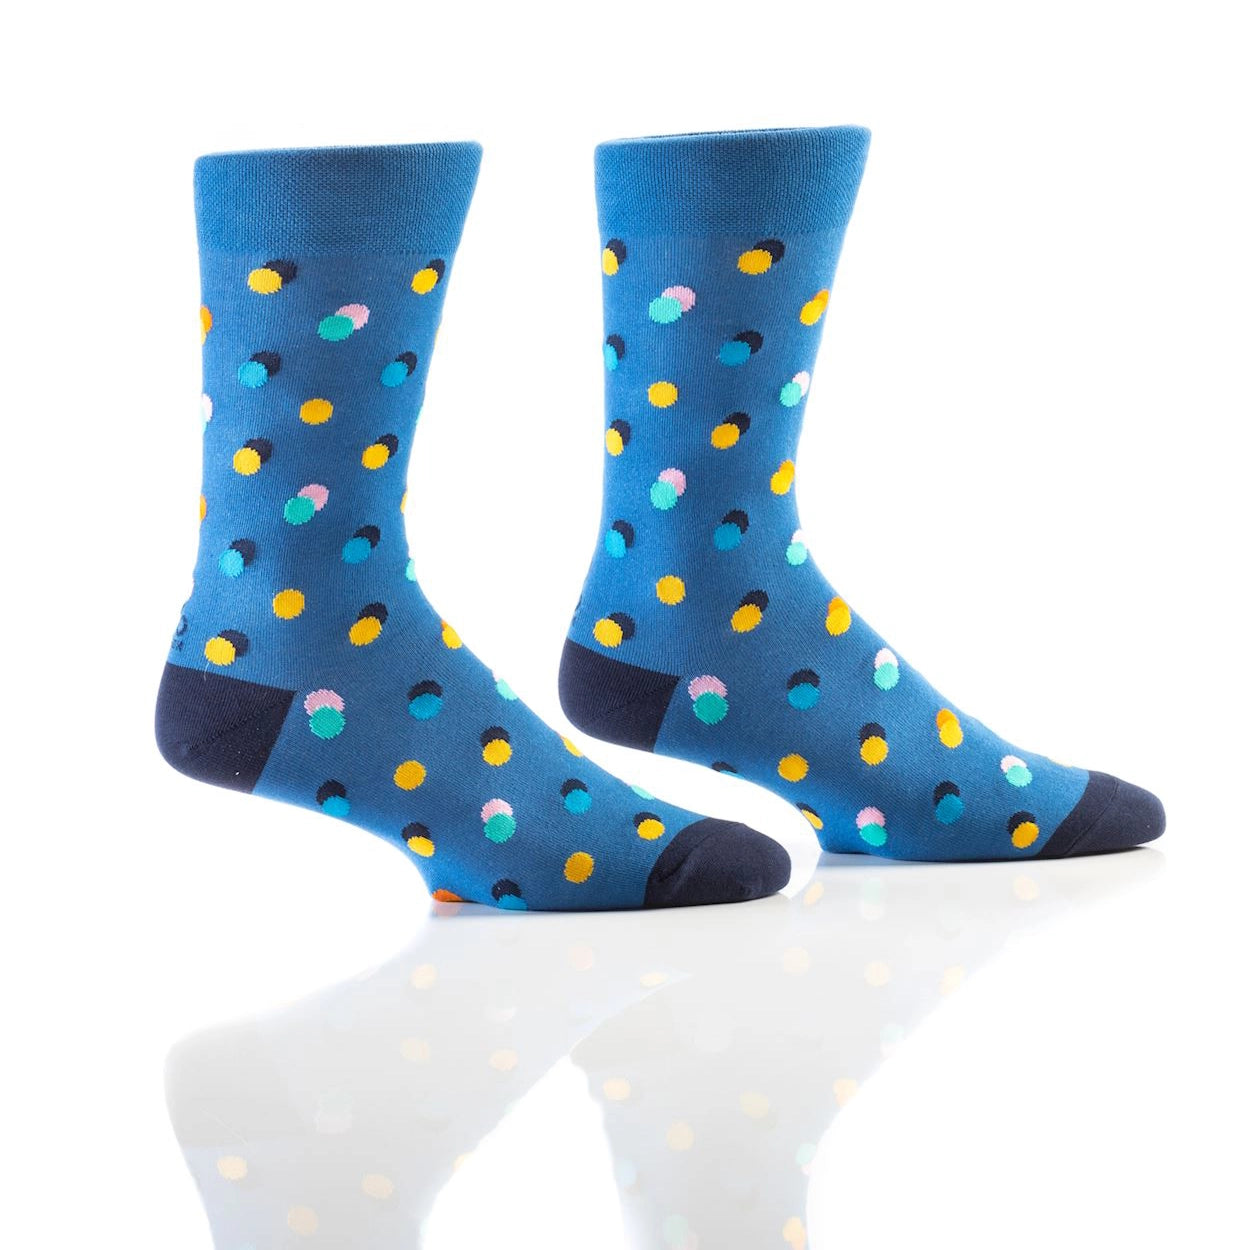 'Yo Sox Dots Crew Socks' in 'Blue' colour